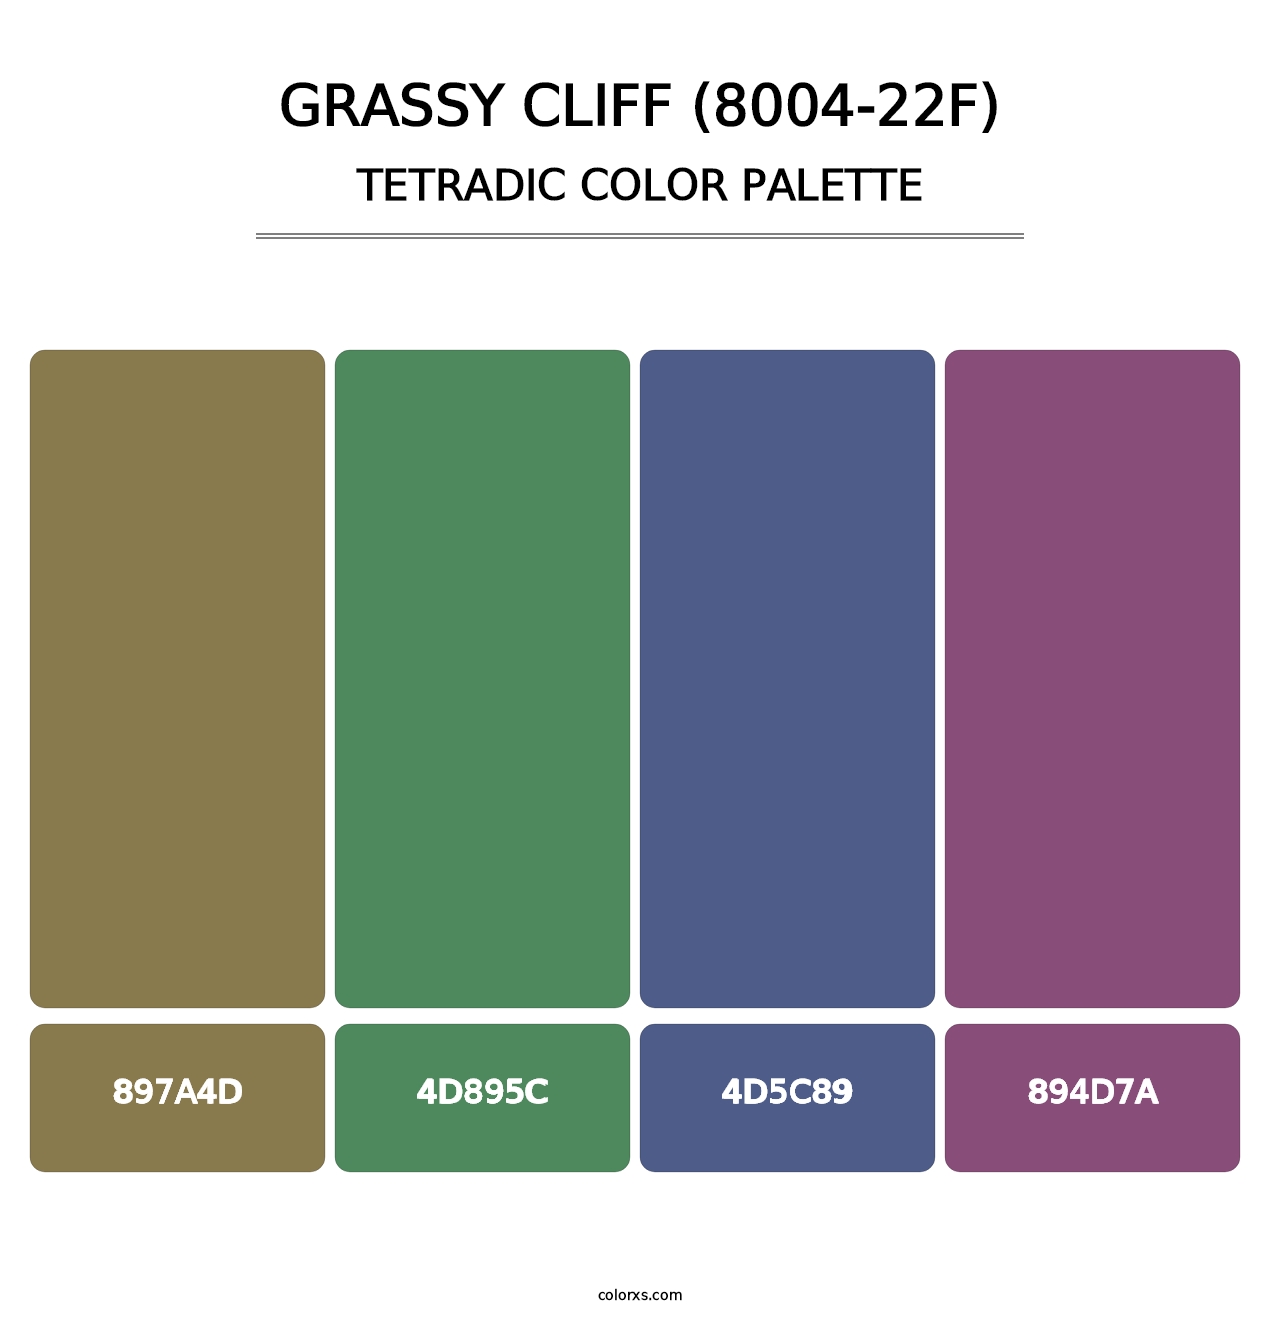 Grassy Cliff (8004-22F) - Tetradic Color Palette